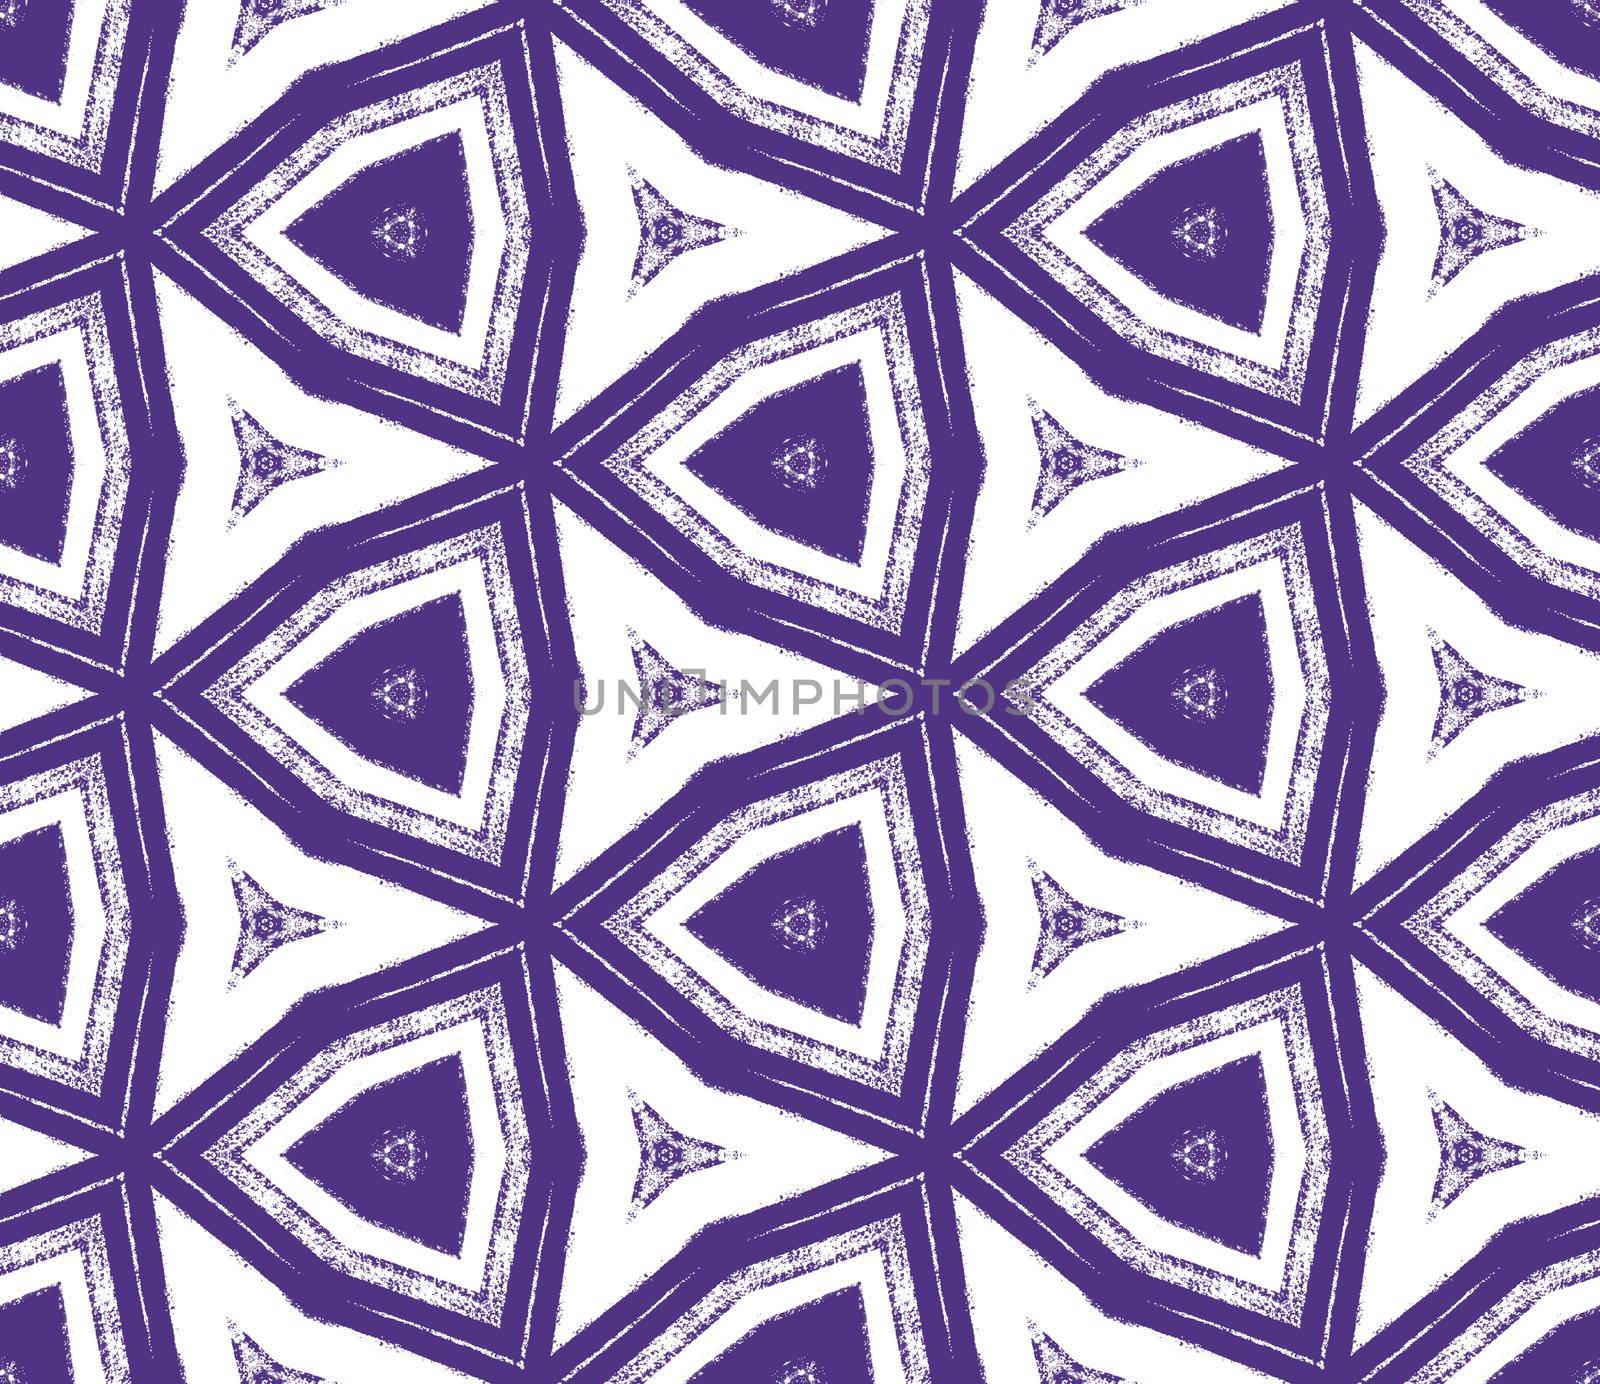 Striped hand drawn pattern. Purple symmetrical kaleidoscope background. Textile ready elegant print, swimwear fabric, wallpaper, wrapping. Repeating striped hand drawn tile.